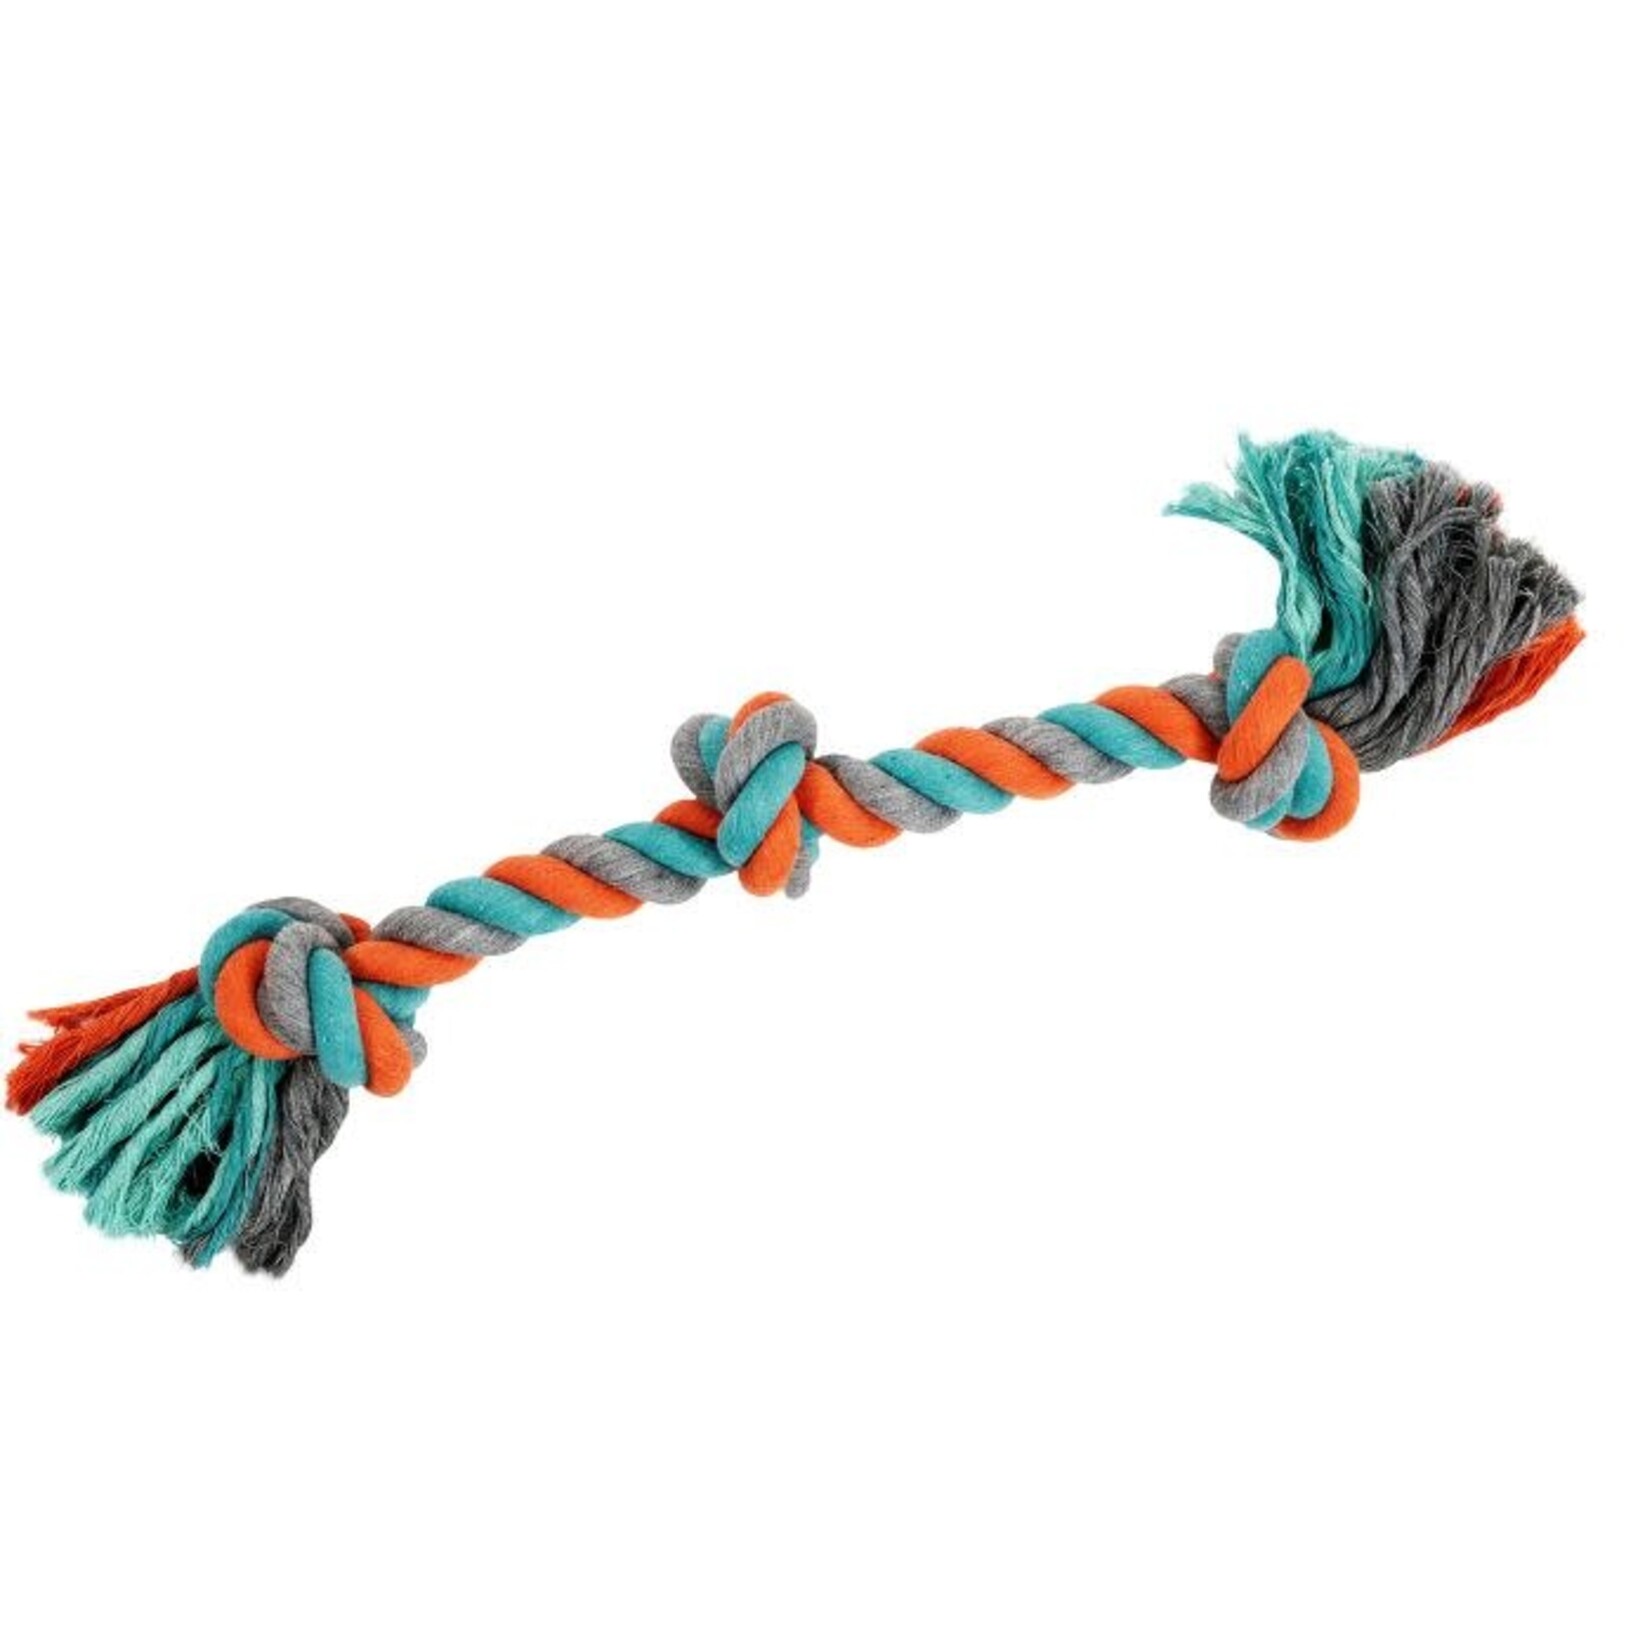 BUD'z Bud'Z Rope Dog Toy With 3 Knots Orange And Blue 23.5"